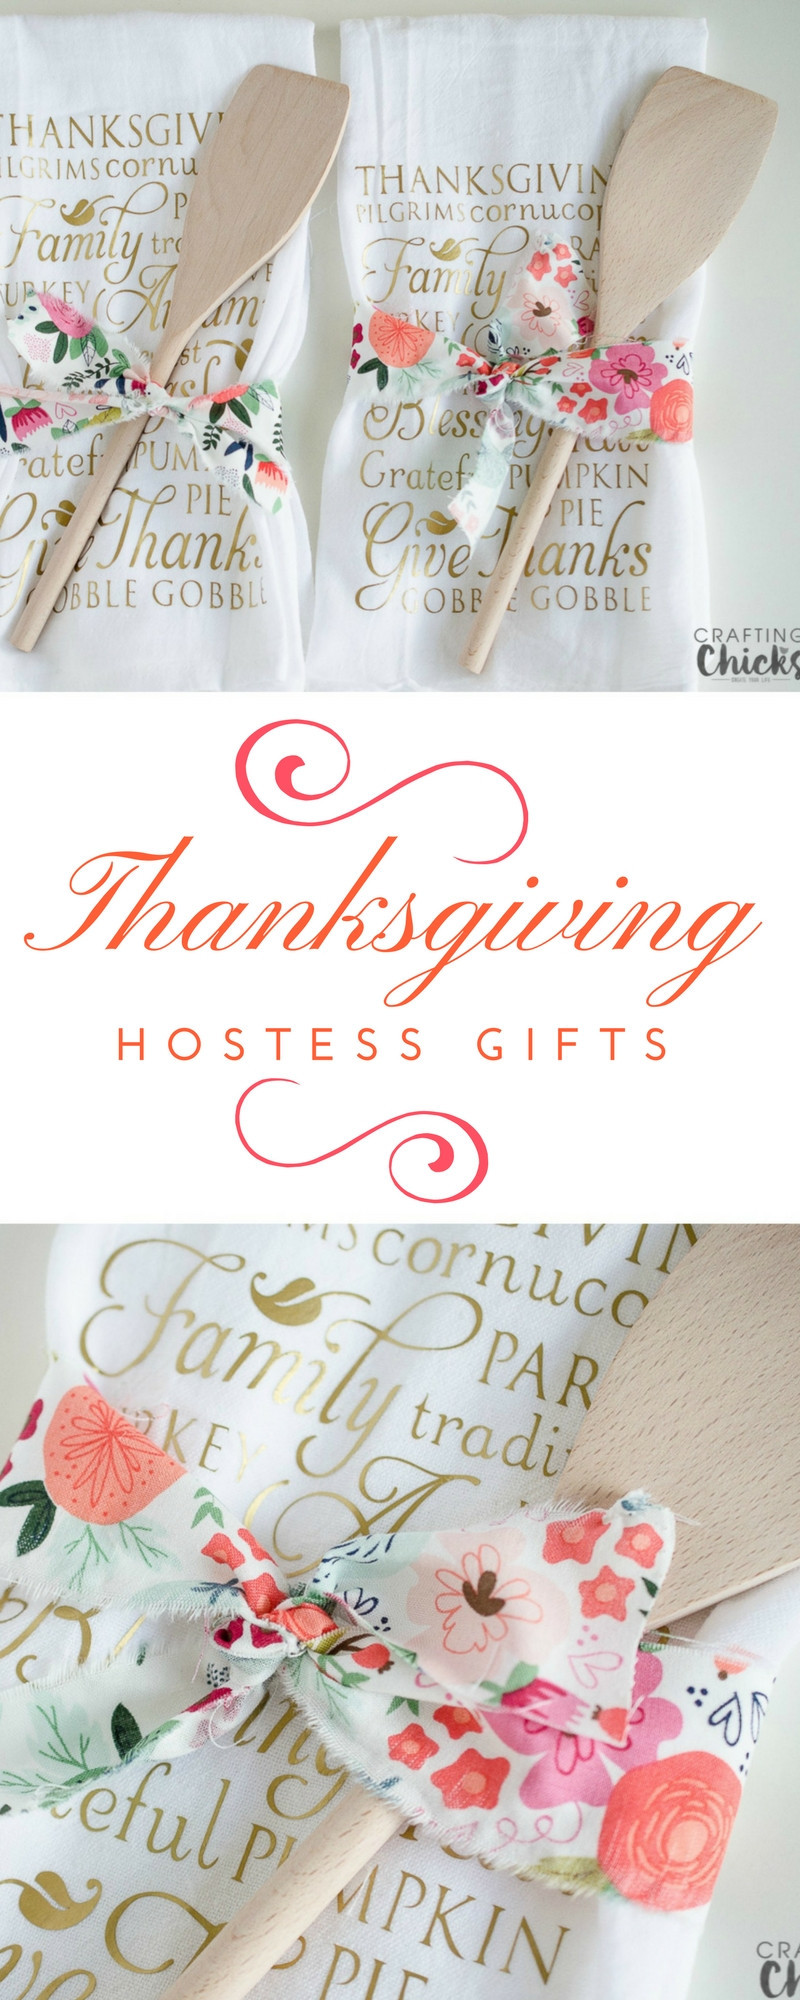 Thanksgiving Hostess Gift Ideas Homemade
 The Best Ideas for Thanksgiving Hostess Gift Ideas